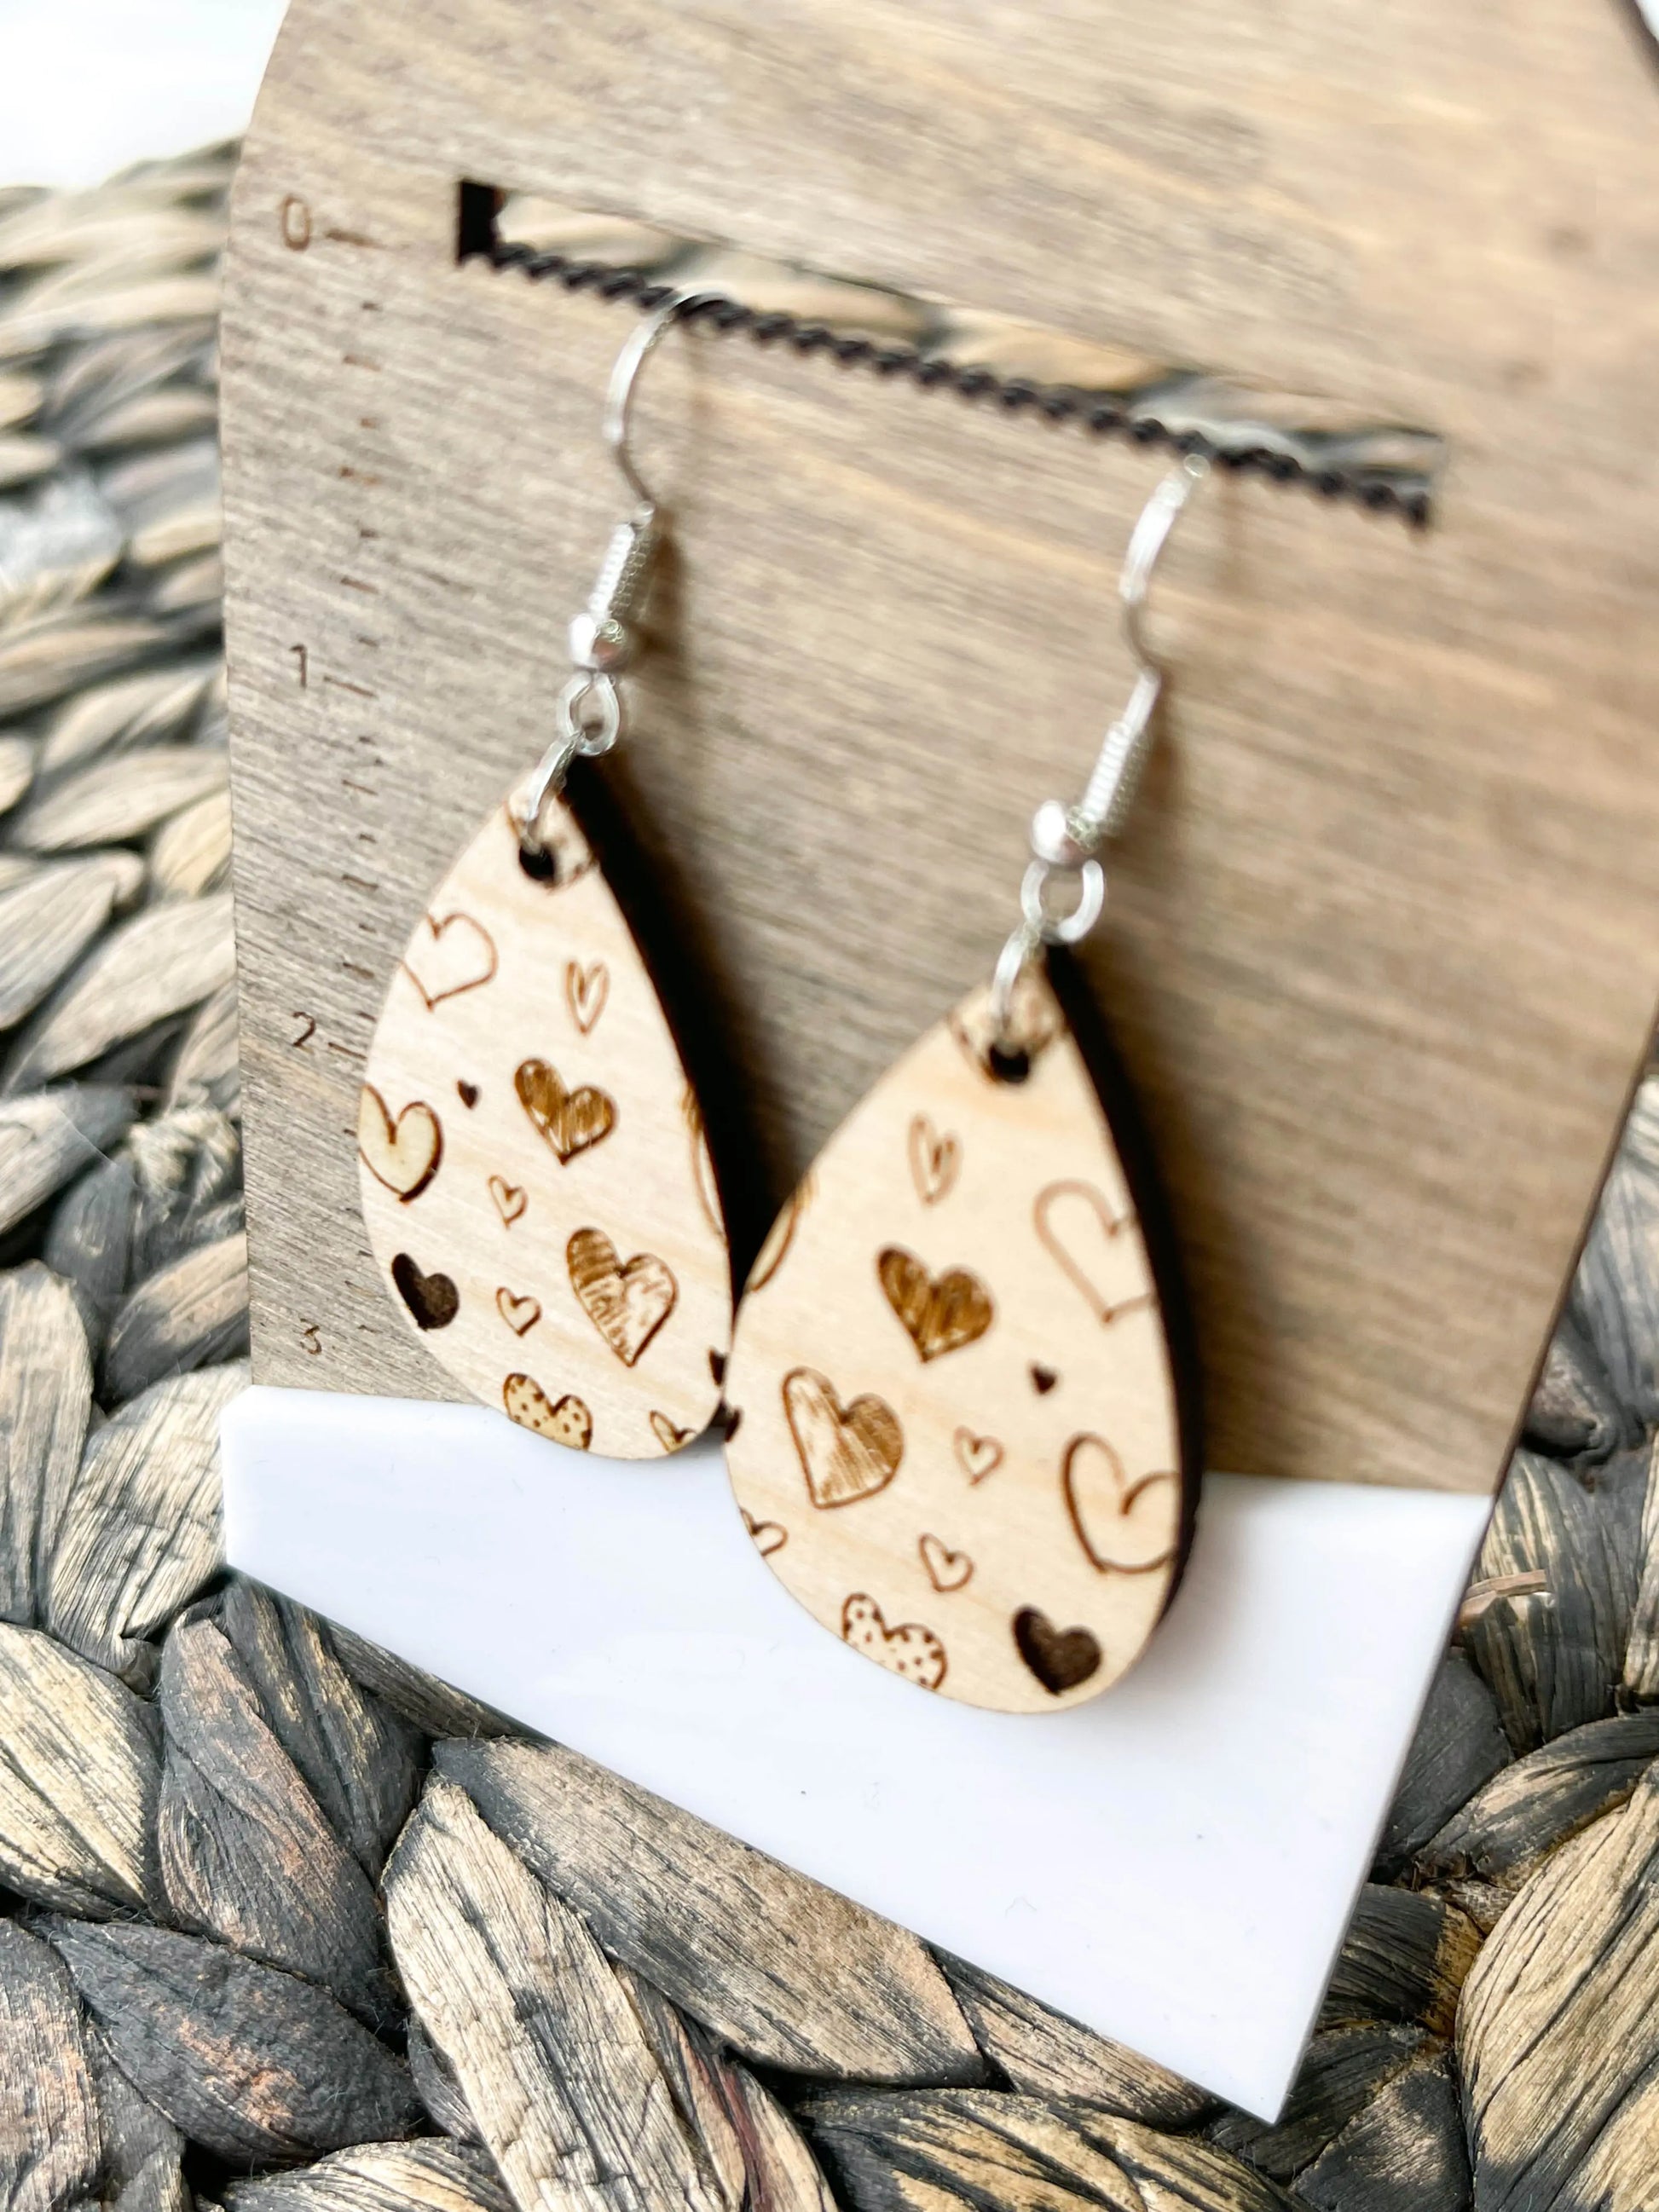 Heart Engraved Wood Teardrop Earrings - Hey There Crafty LLC